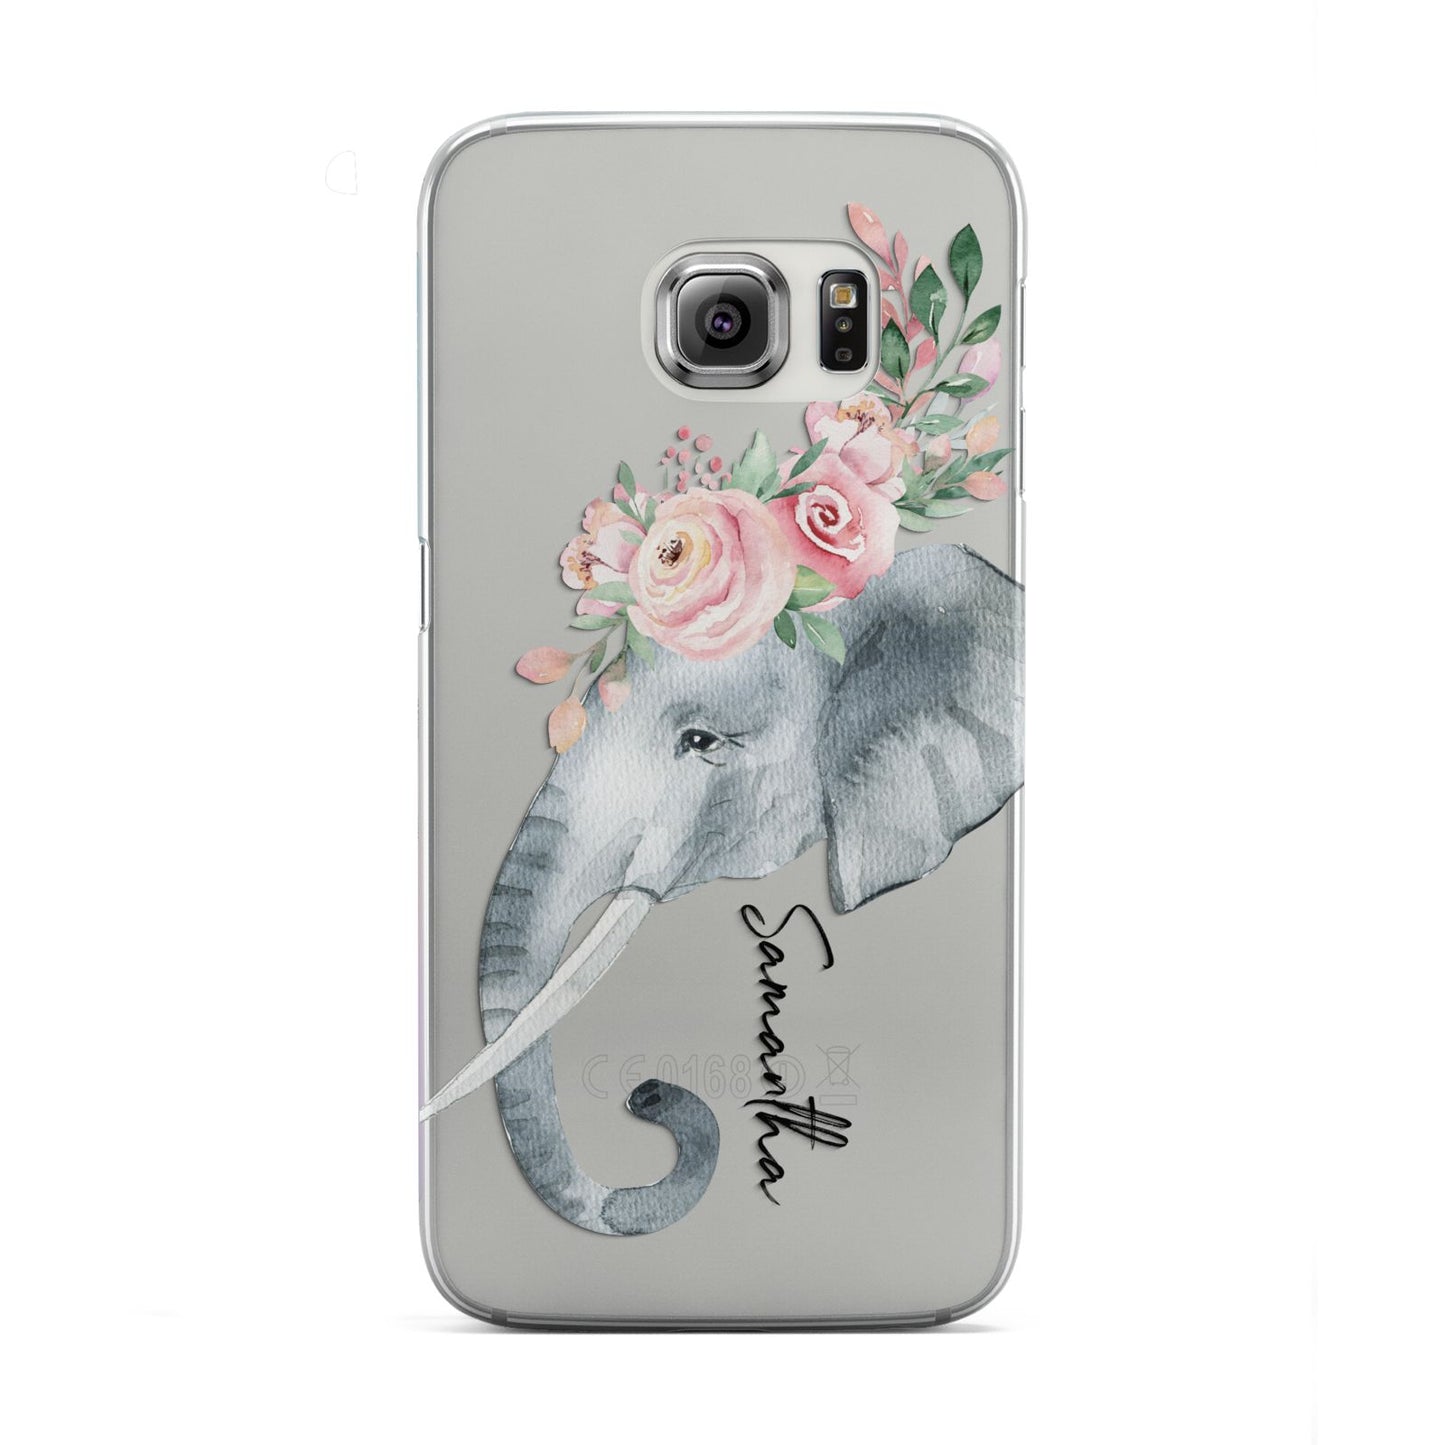 Personalised Elephant Samsung Galaxy S6 Edge Case